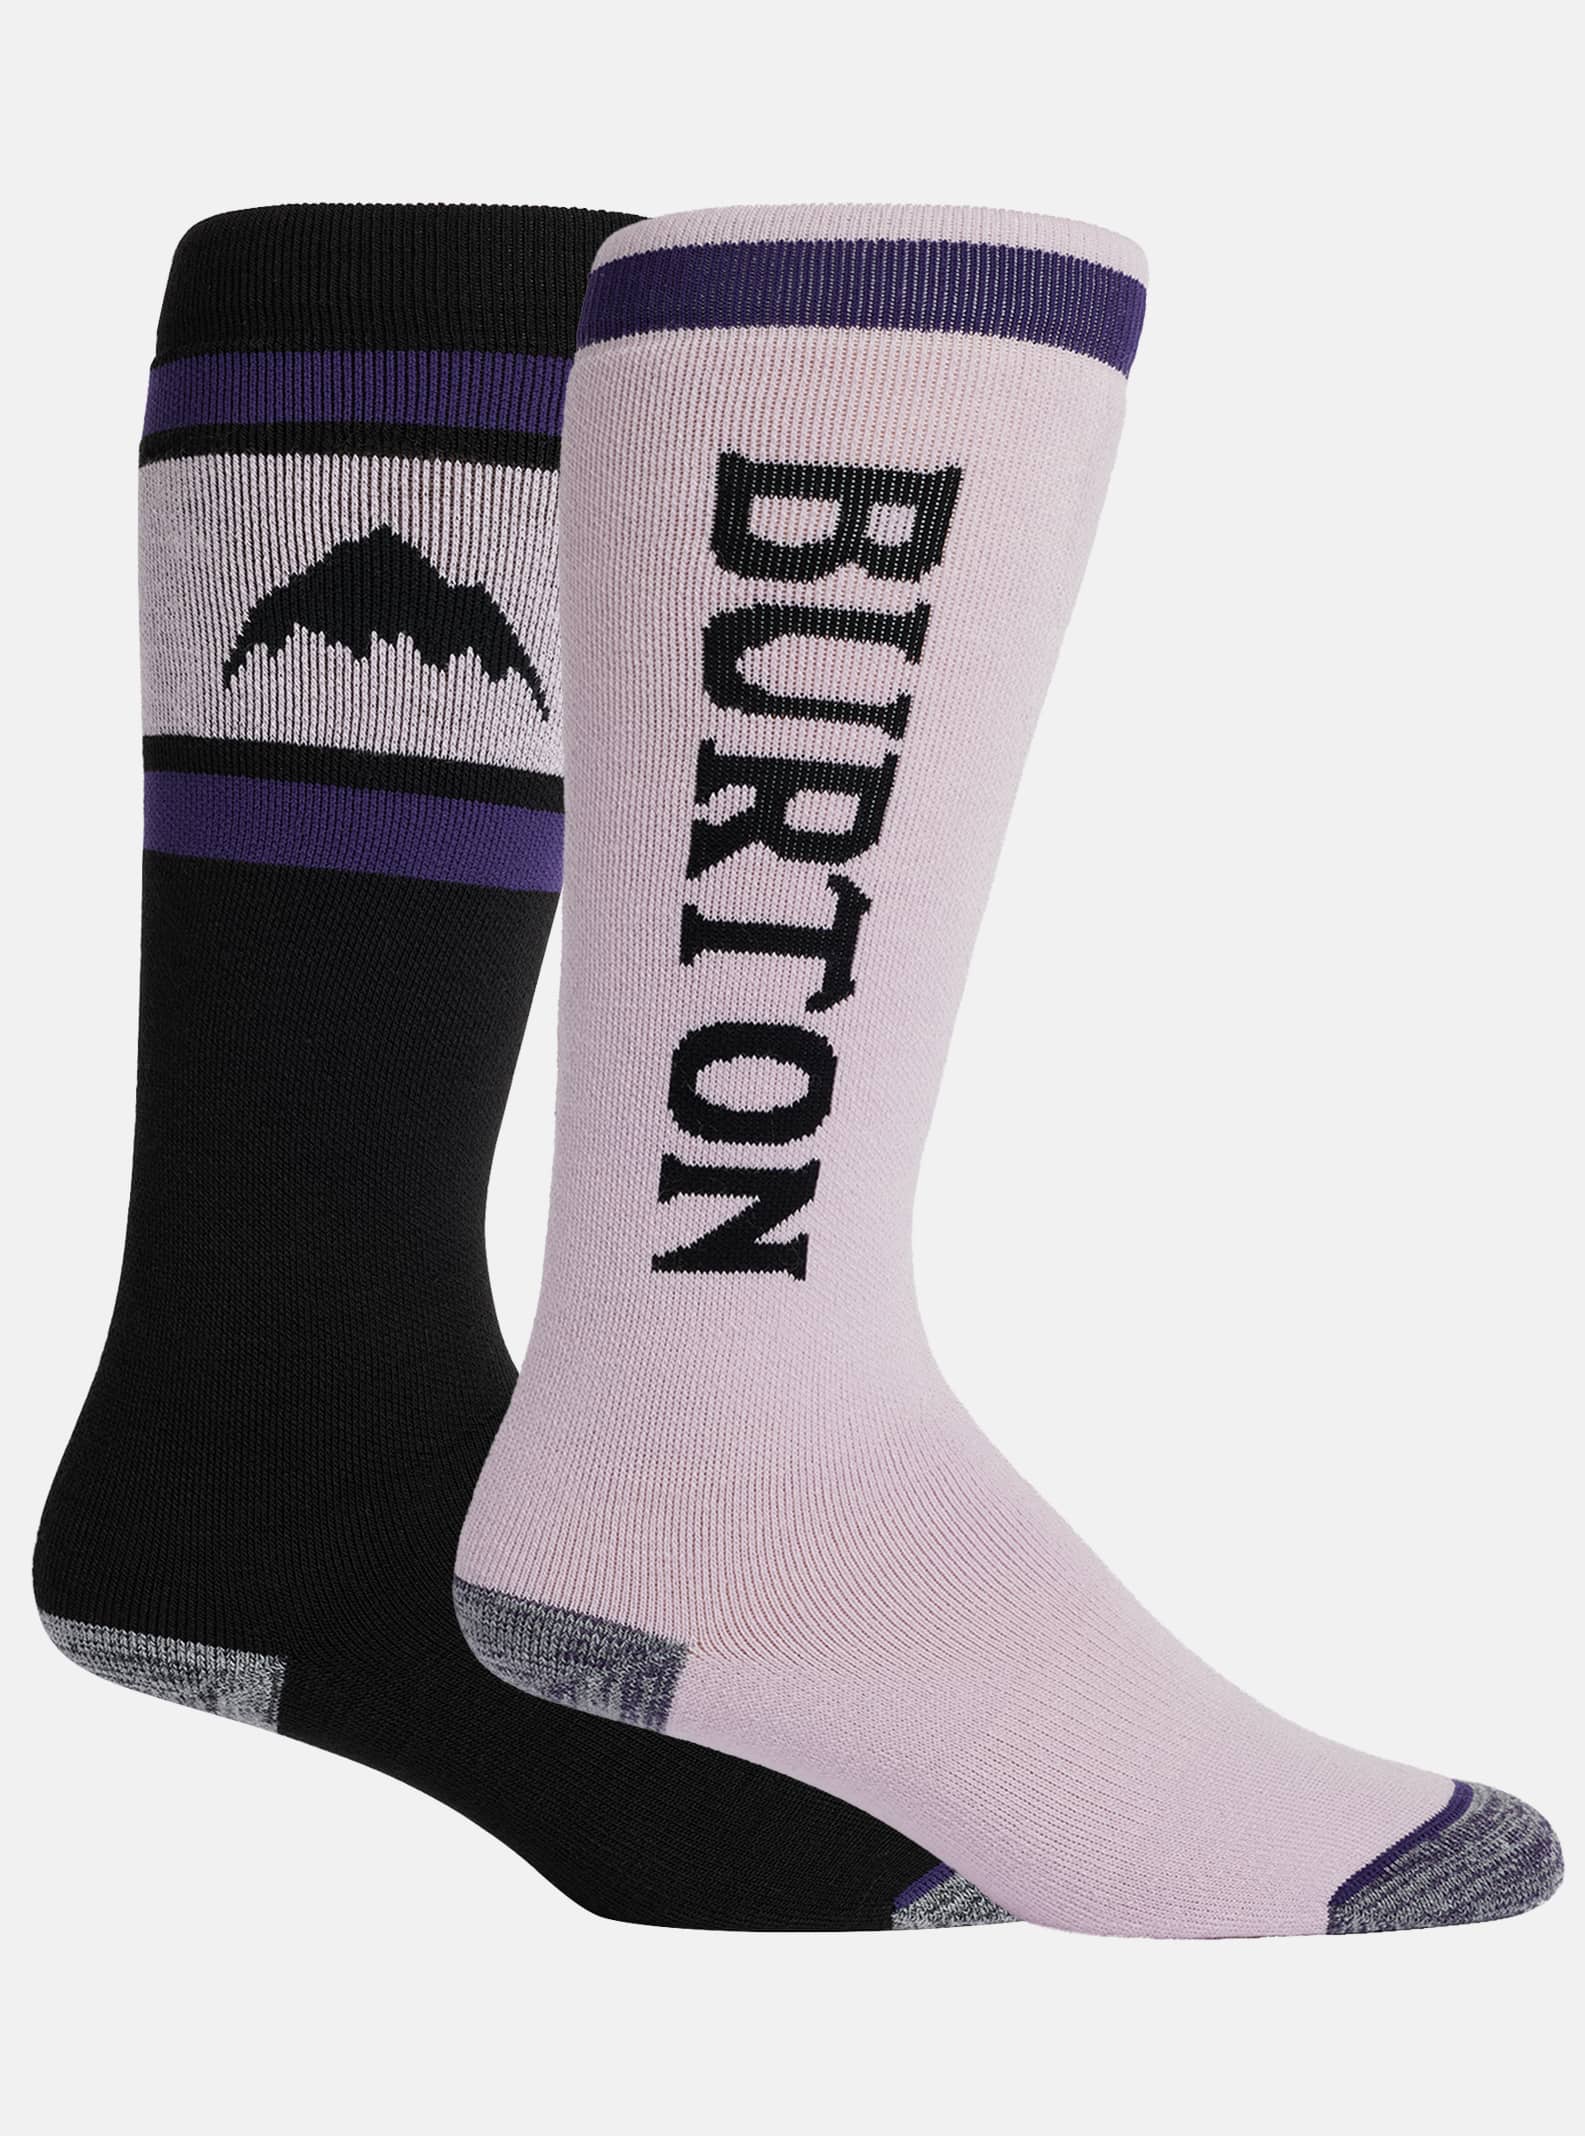 burton snowboard socks sale